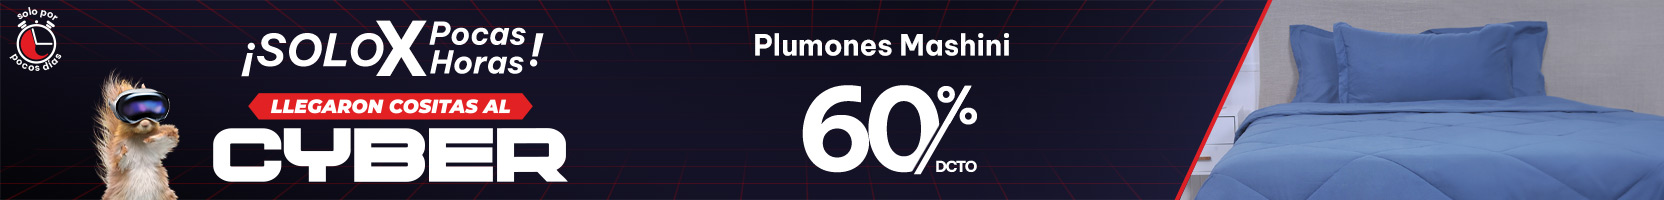 60% Plumones mashini